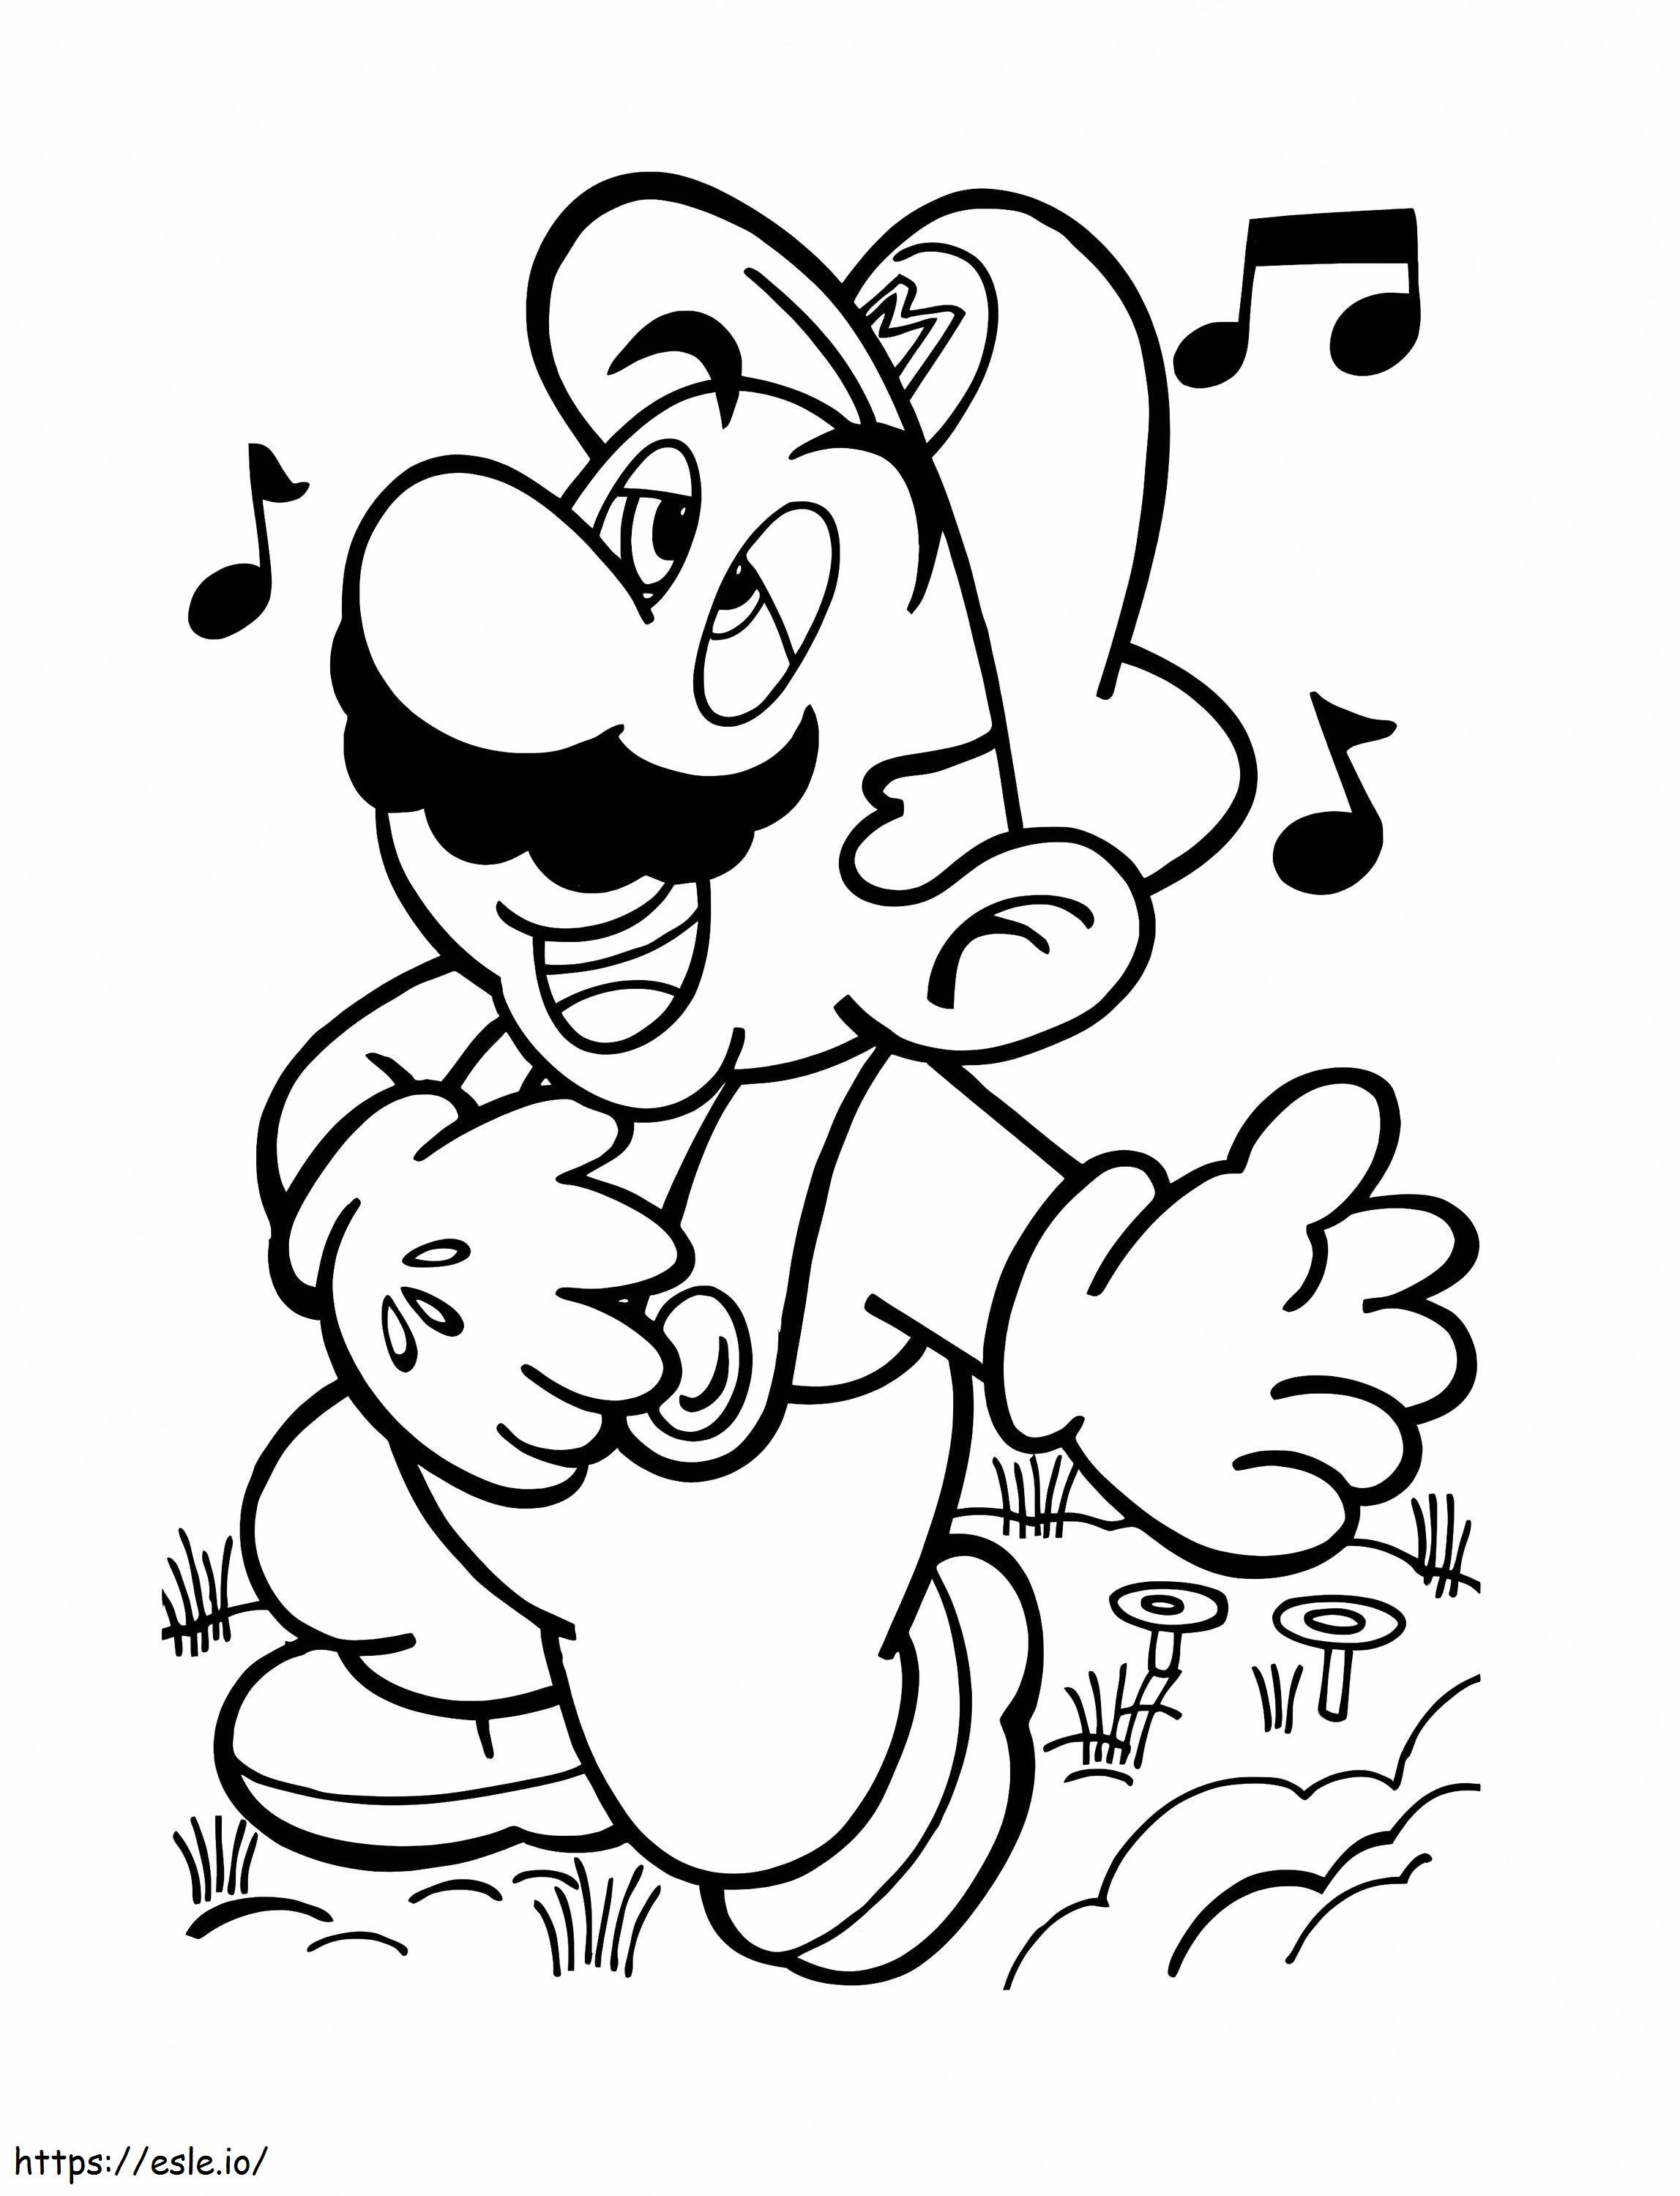 Mario cantando para colorir